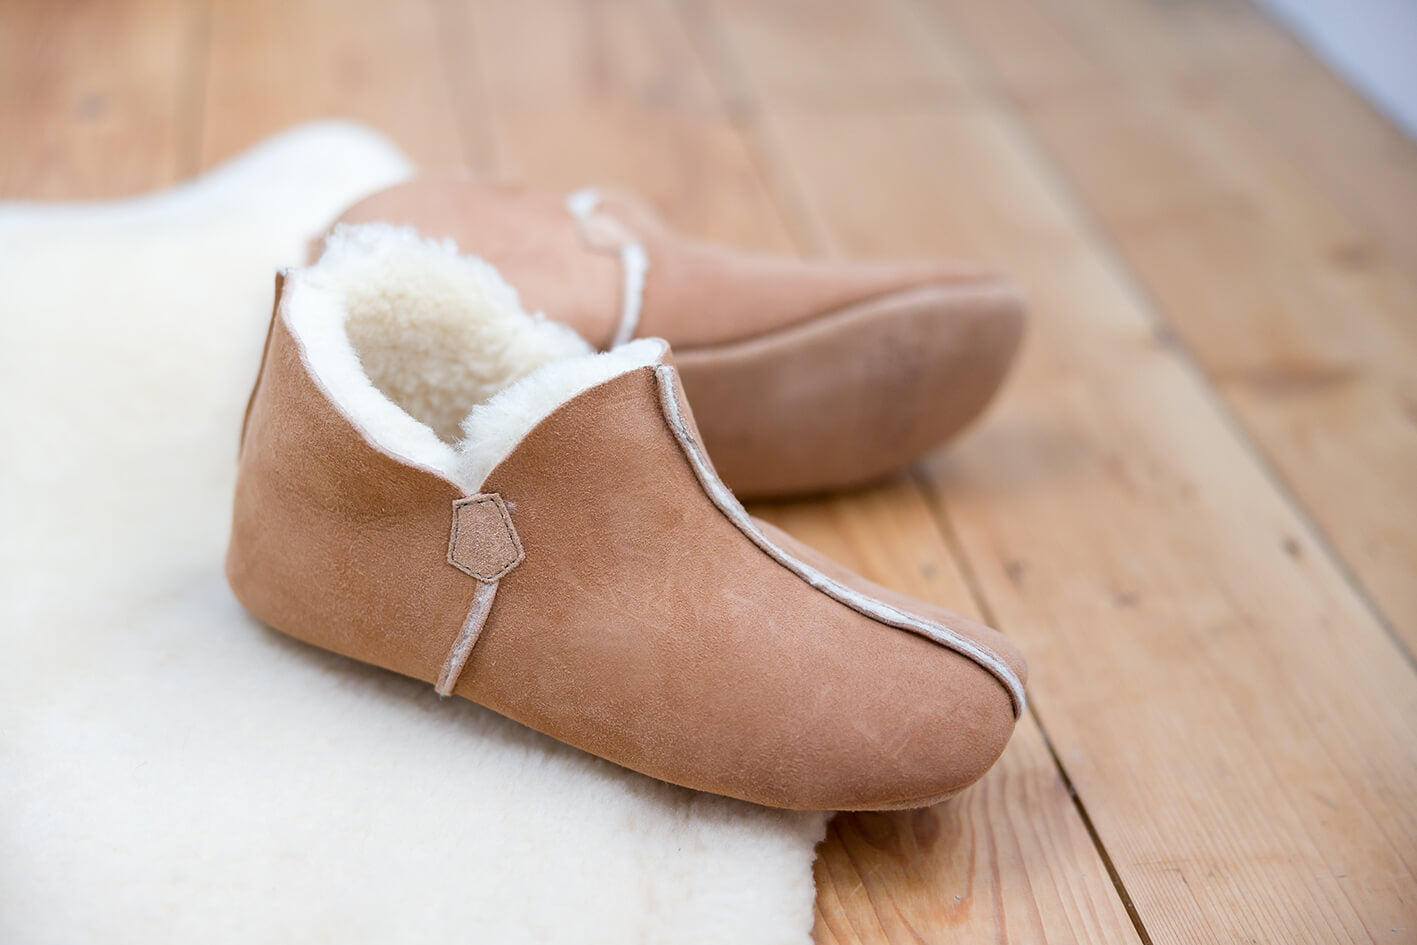 Details more than 167 sheepskin slippers womens super hot